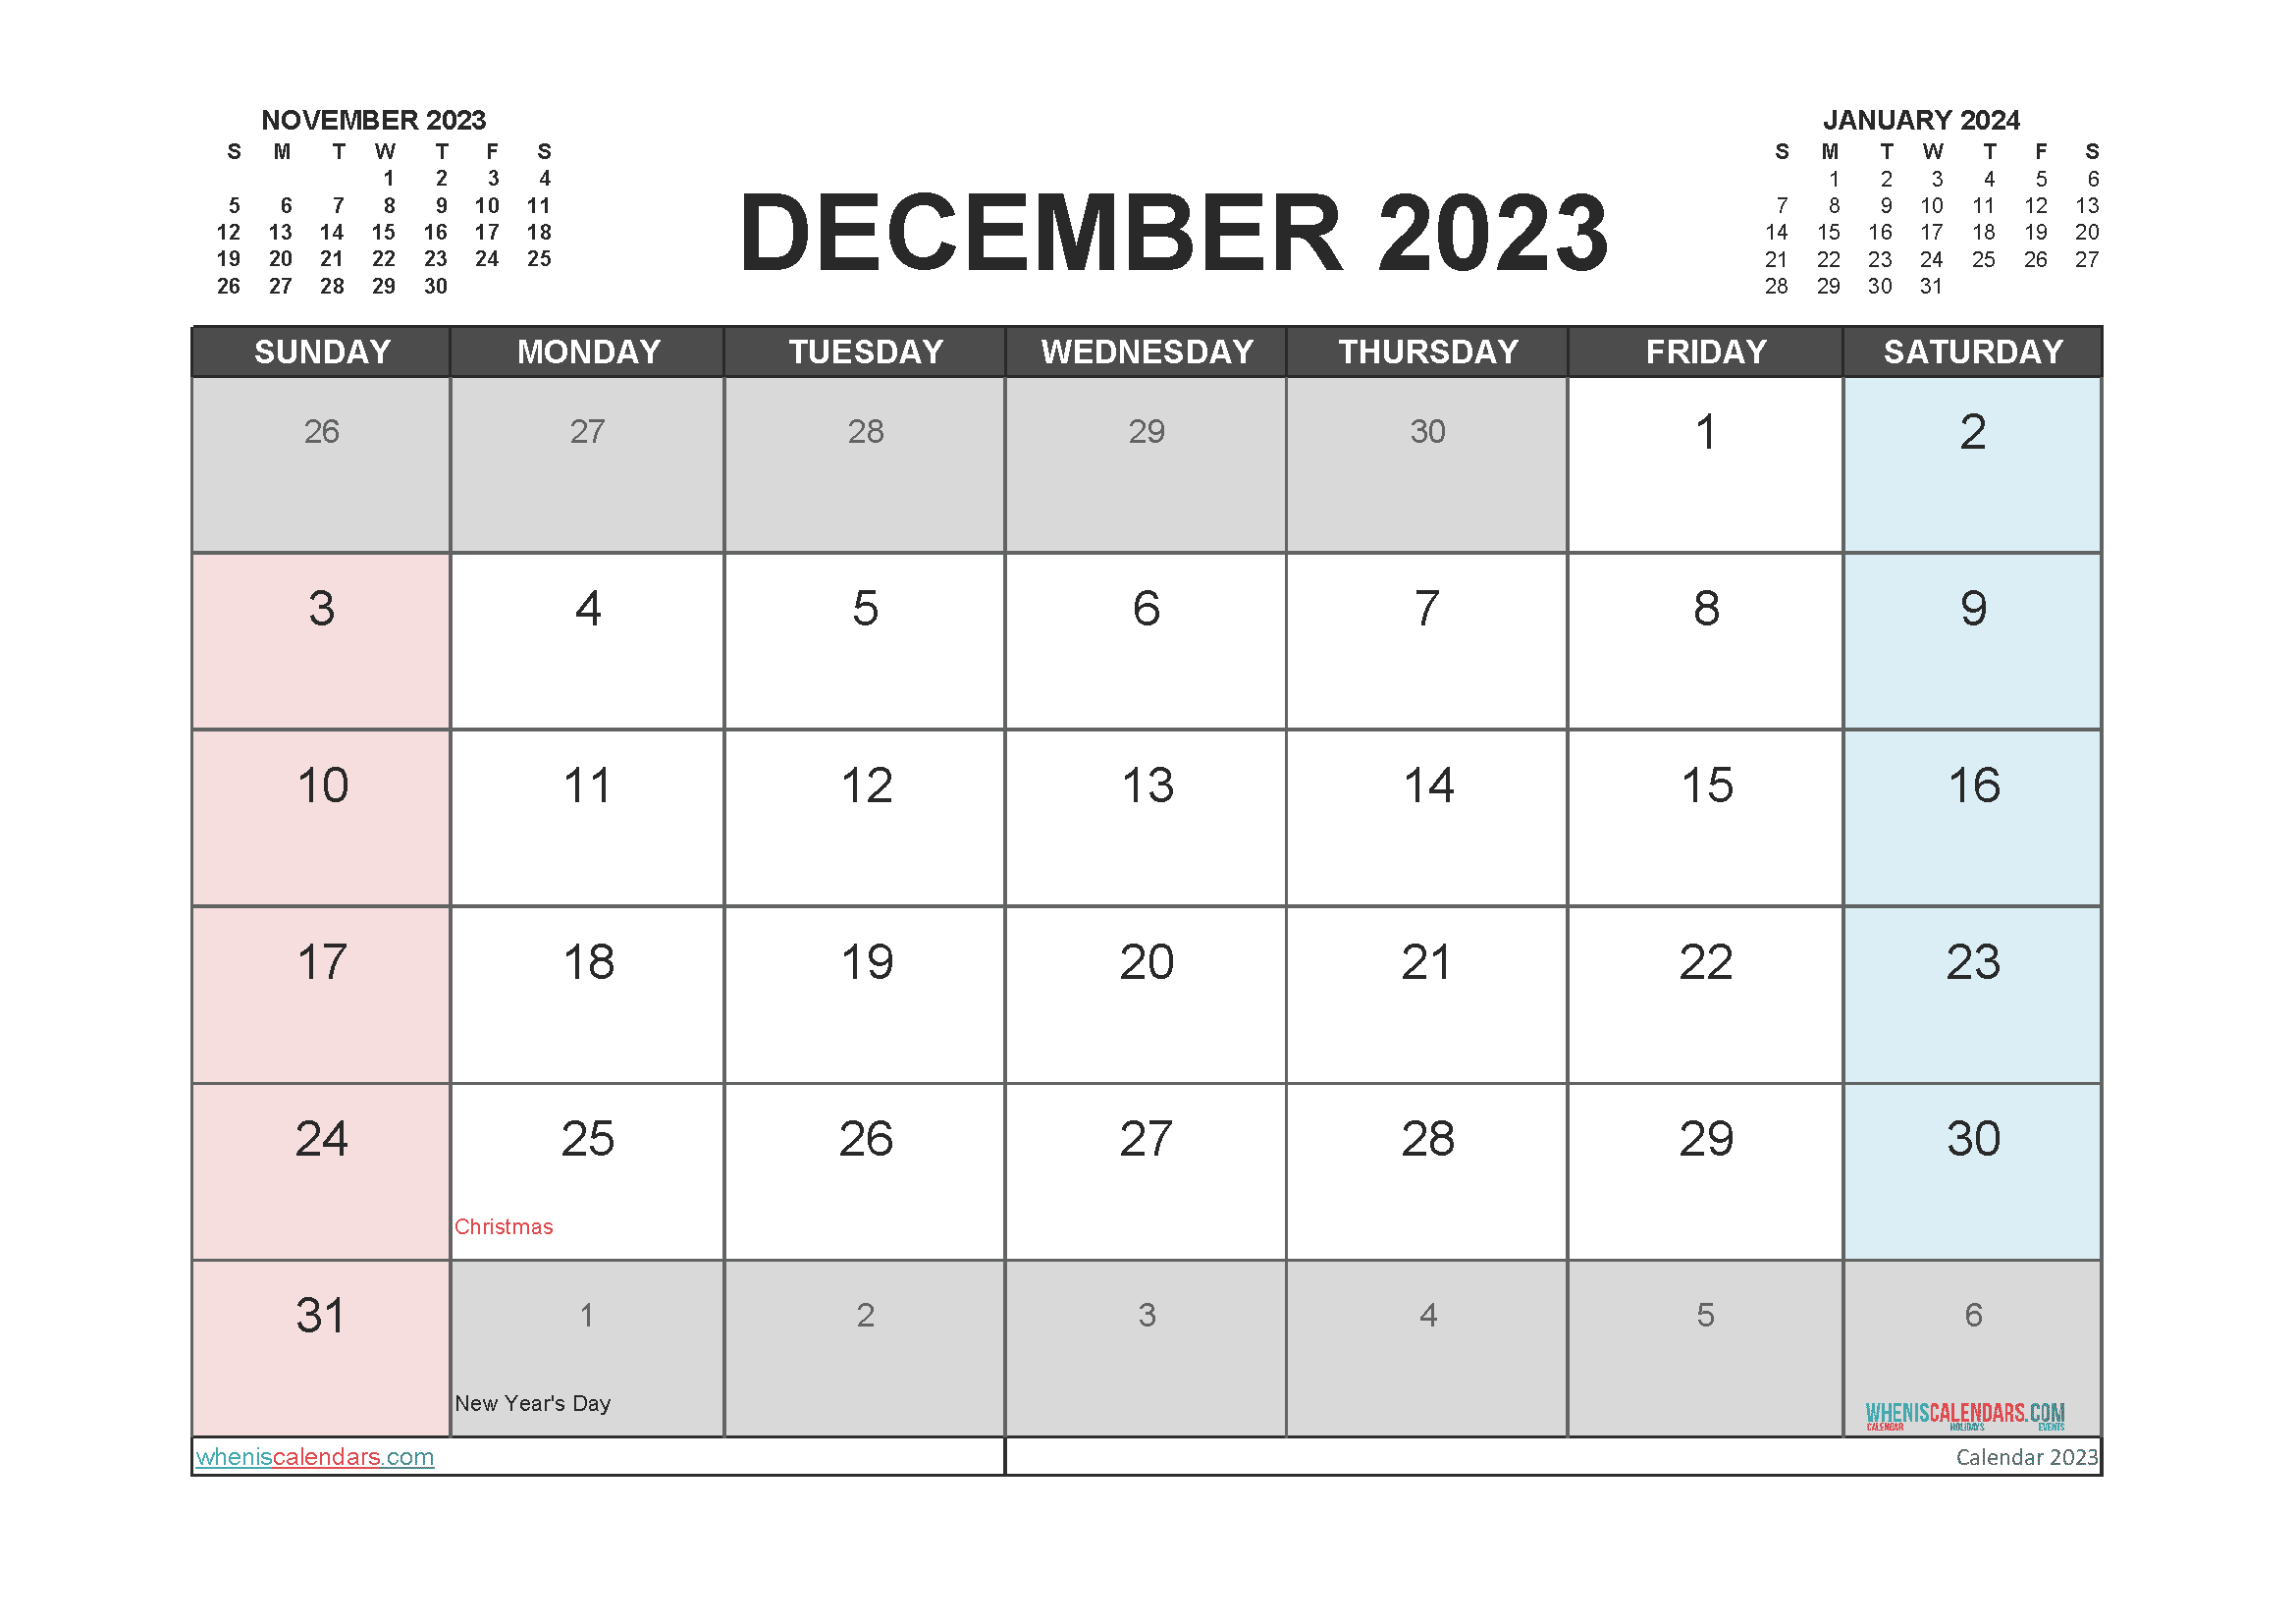 Free Printable Calendar December 2023 with Holidays PDF in Landscape